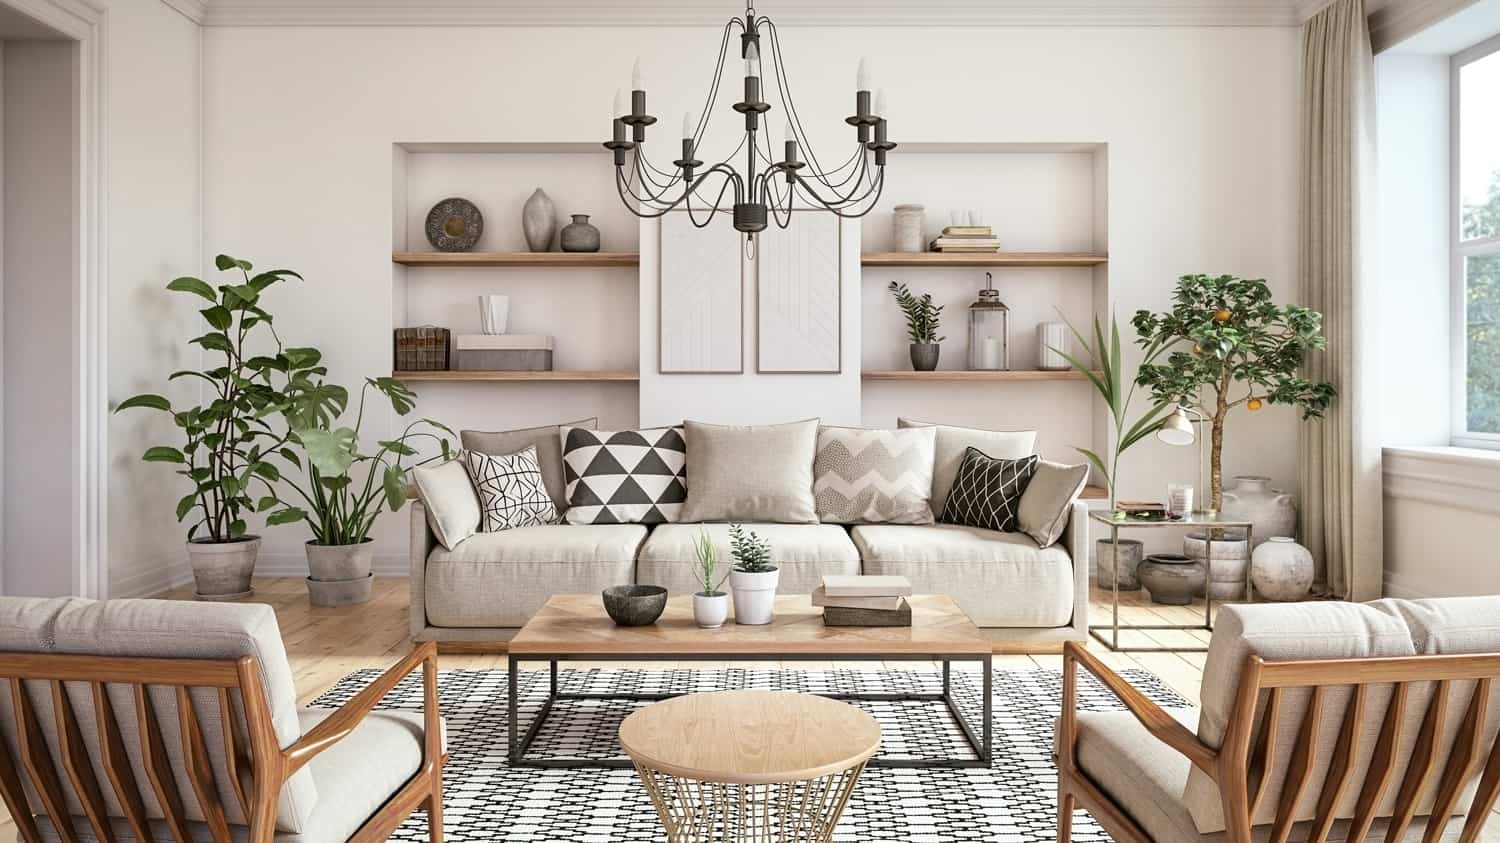 Scandinavian interior design living room 3d render with beige colored furniture and wooden elements